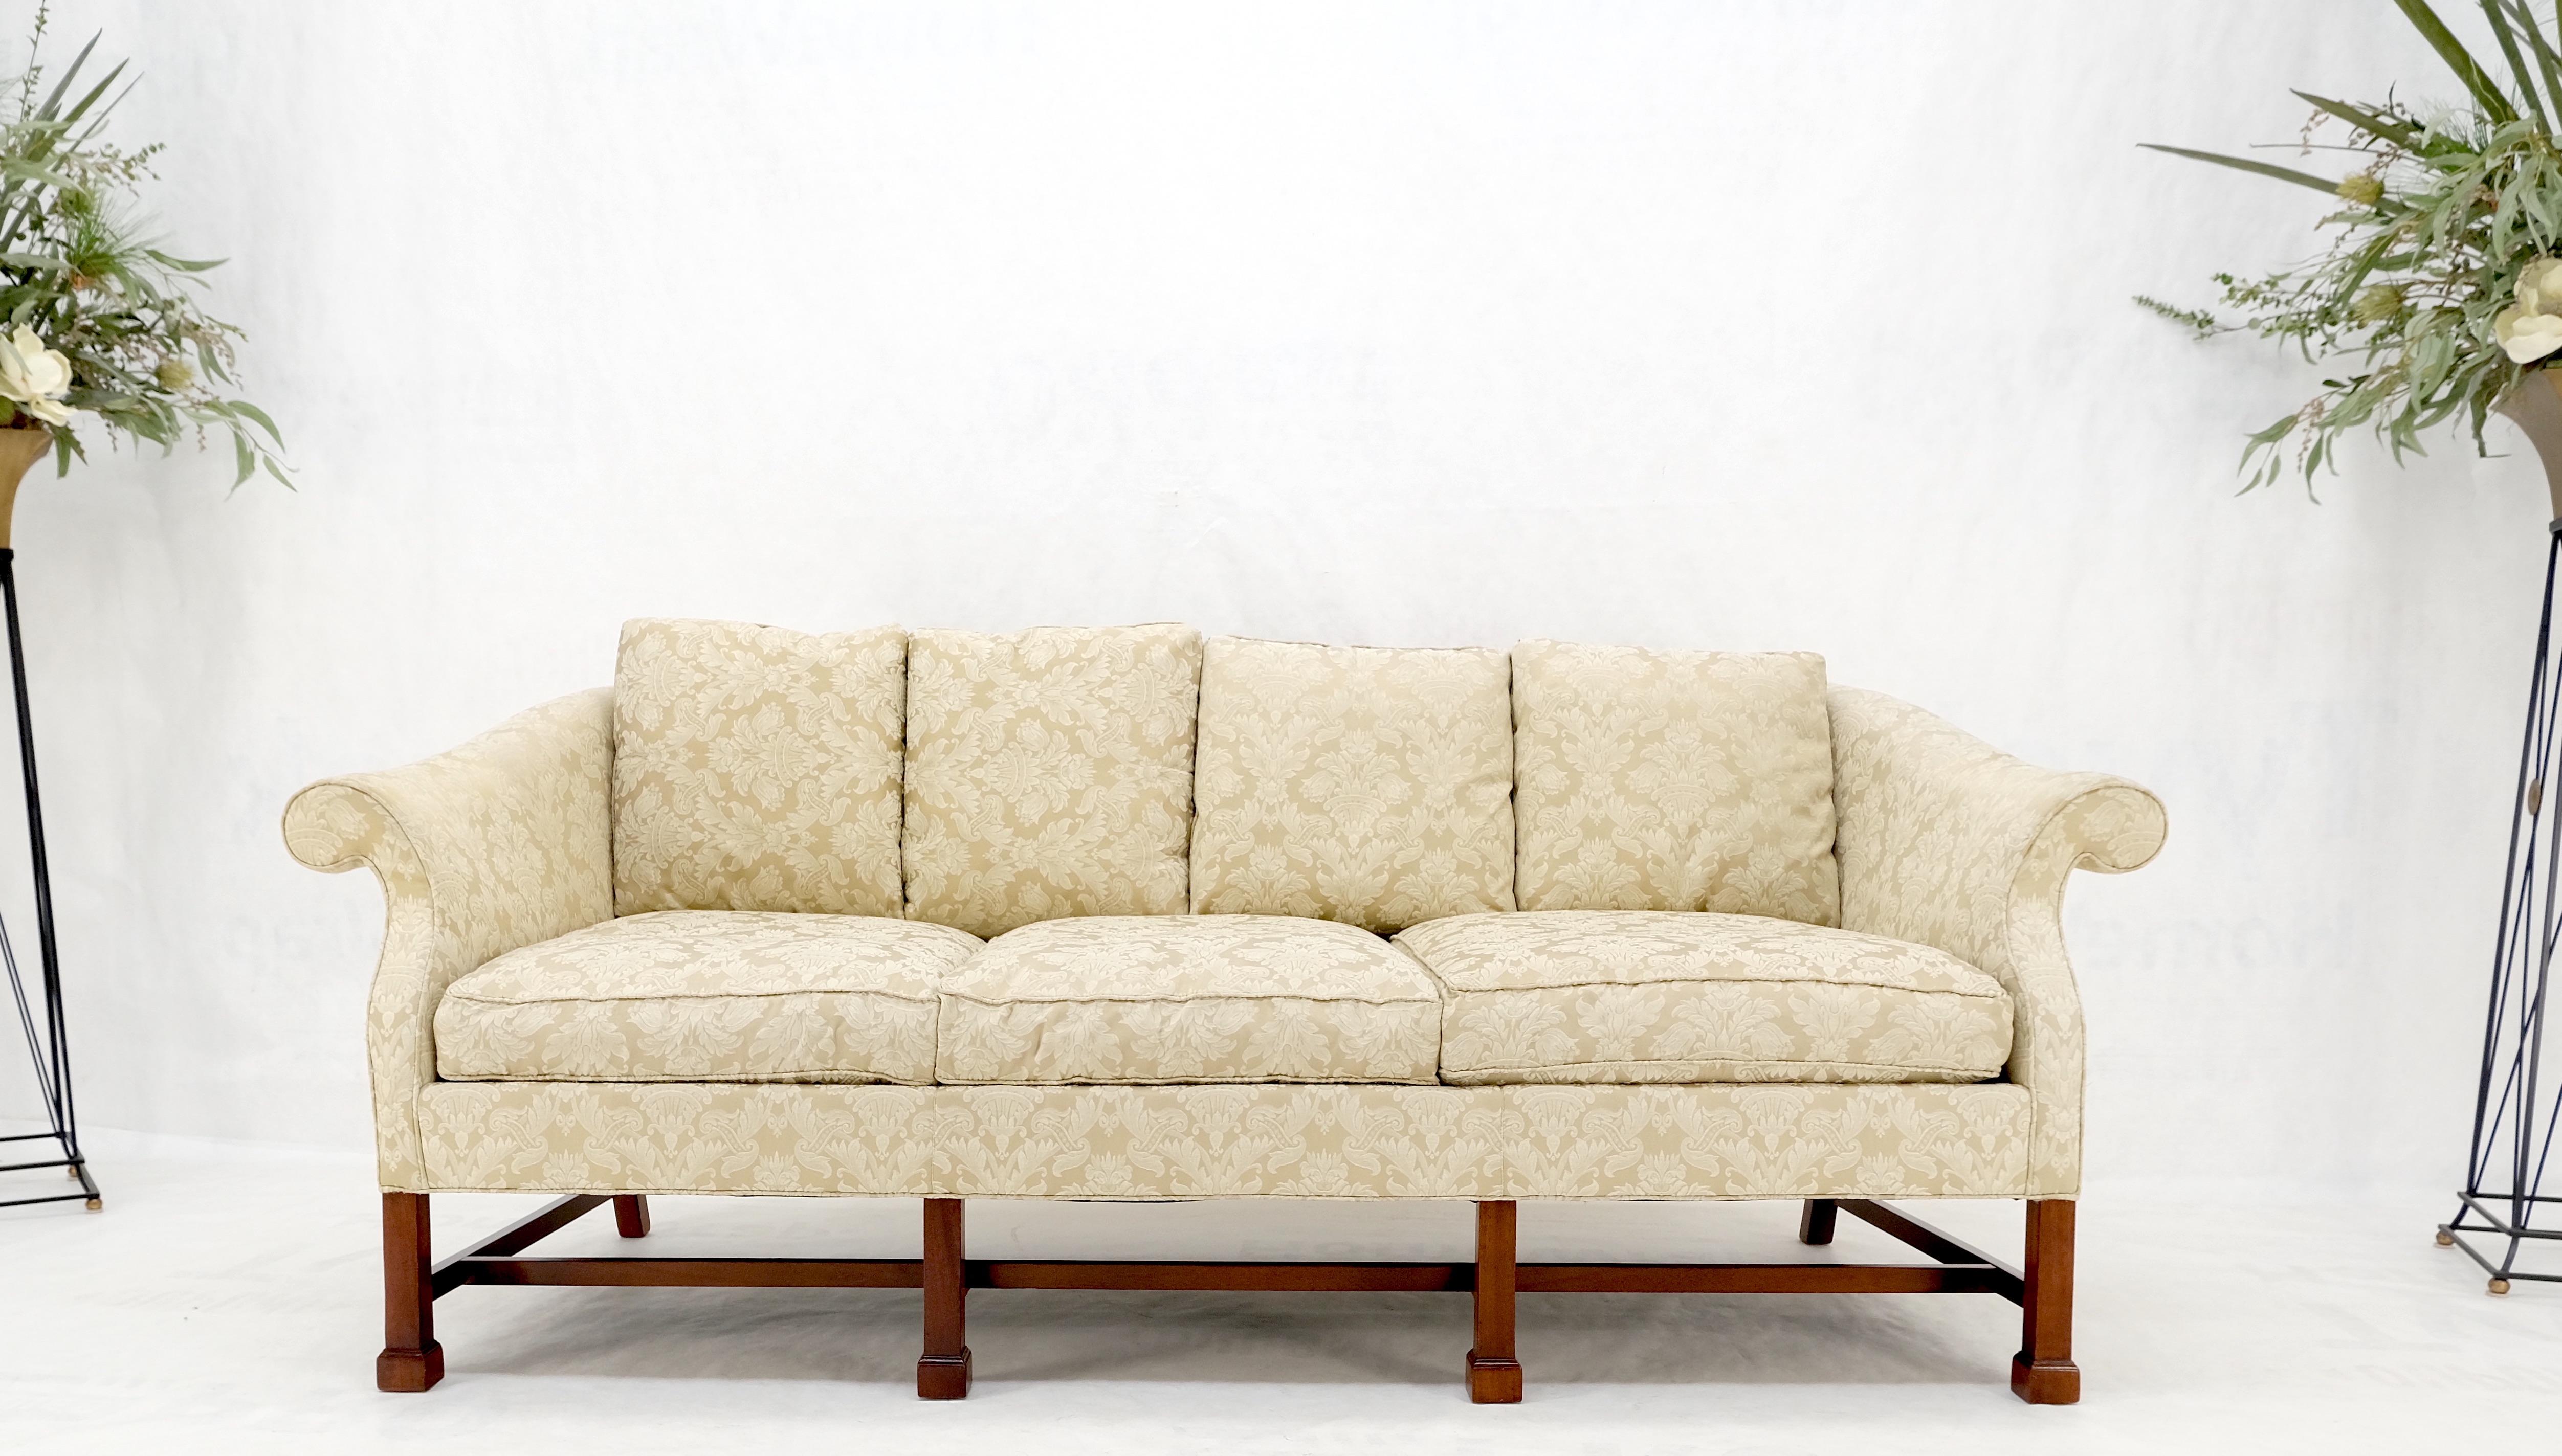 Camel back federal style mahogany stretcher base beige upholstery sofa mint!